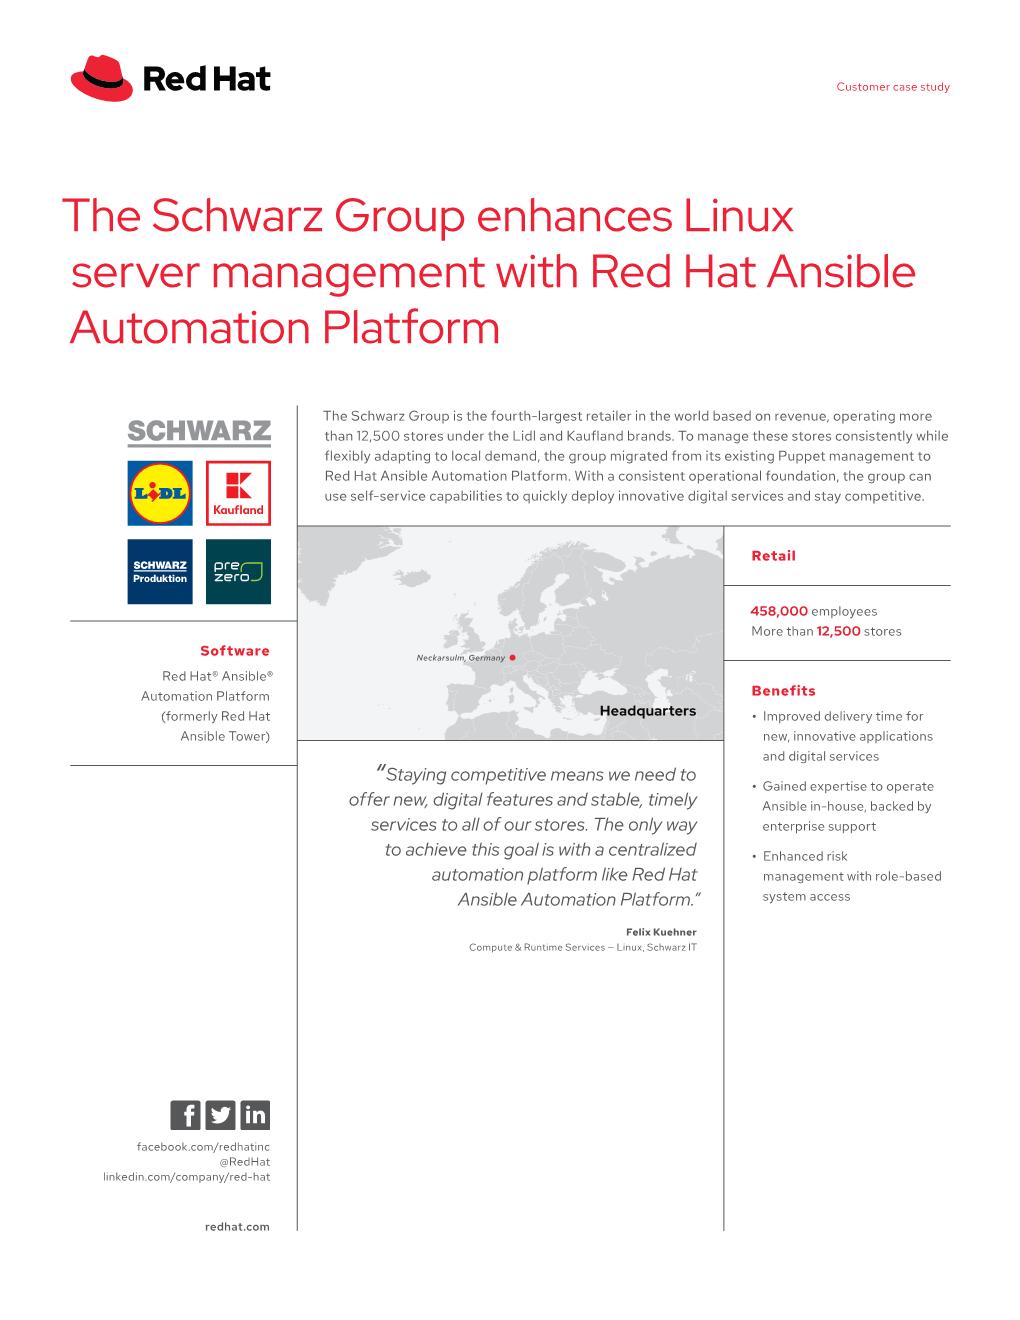 The Schwarz Group Enhances Linux Server Management with Red Hat Ansible Automation Platform